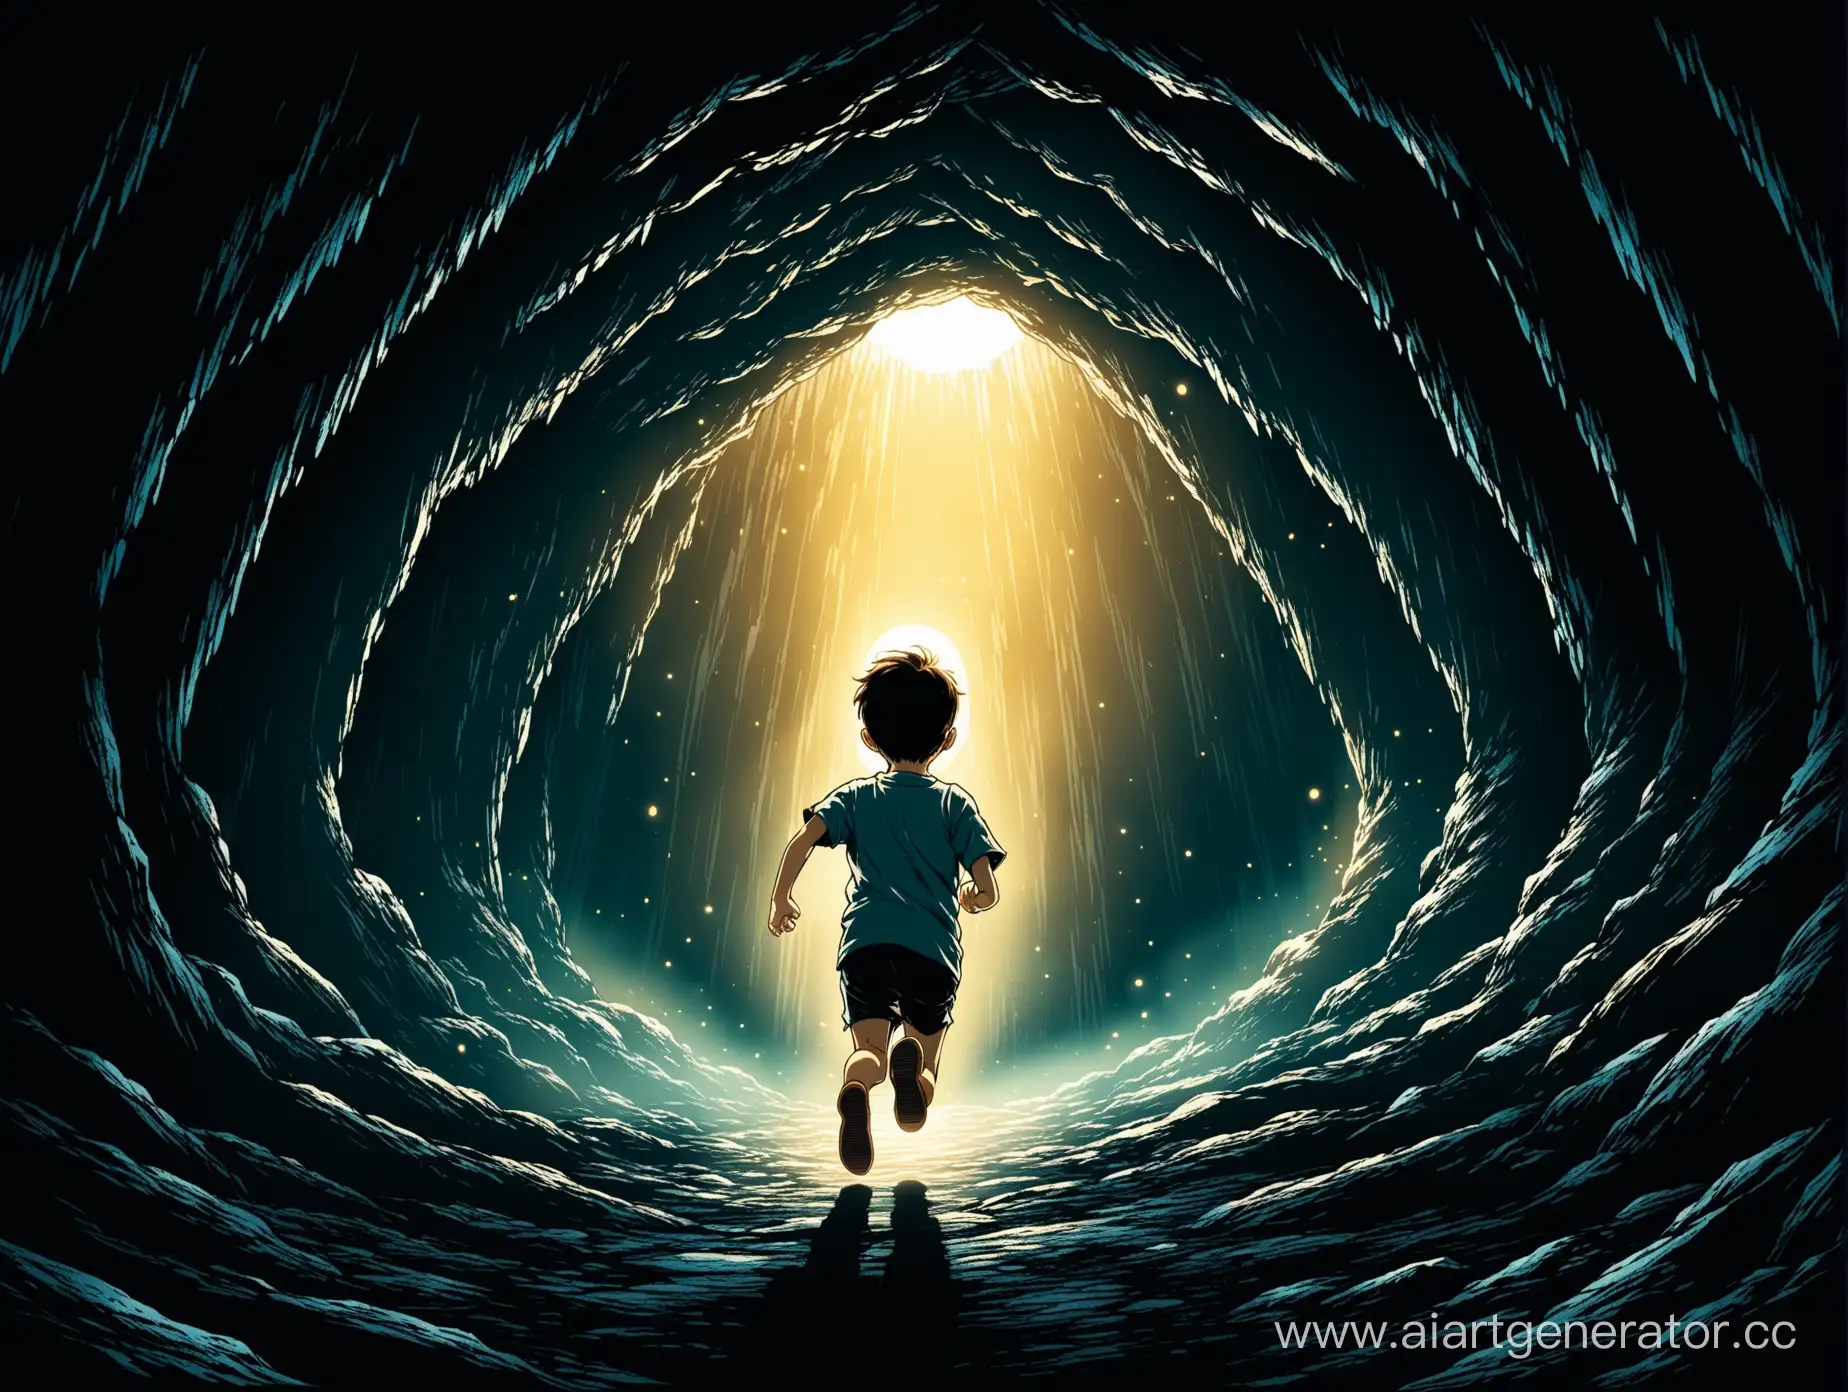 Young-Boys-Adventure-Through-a-Mysterious-Cave-Toward-a-Mystical-Light